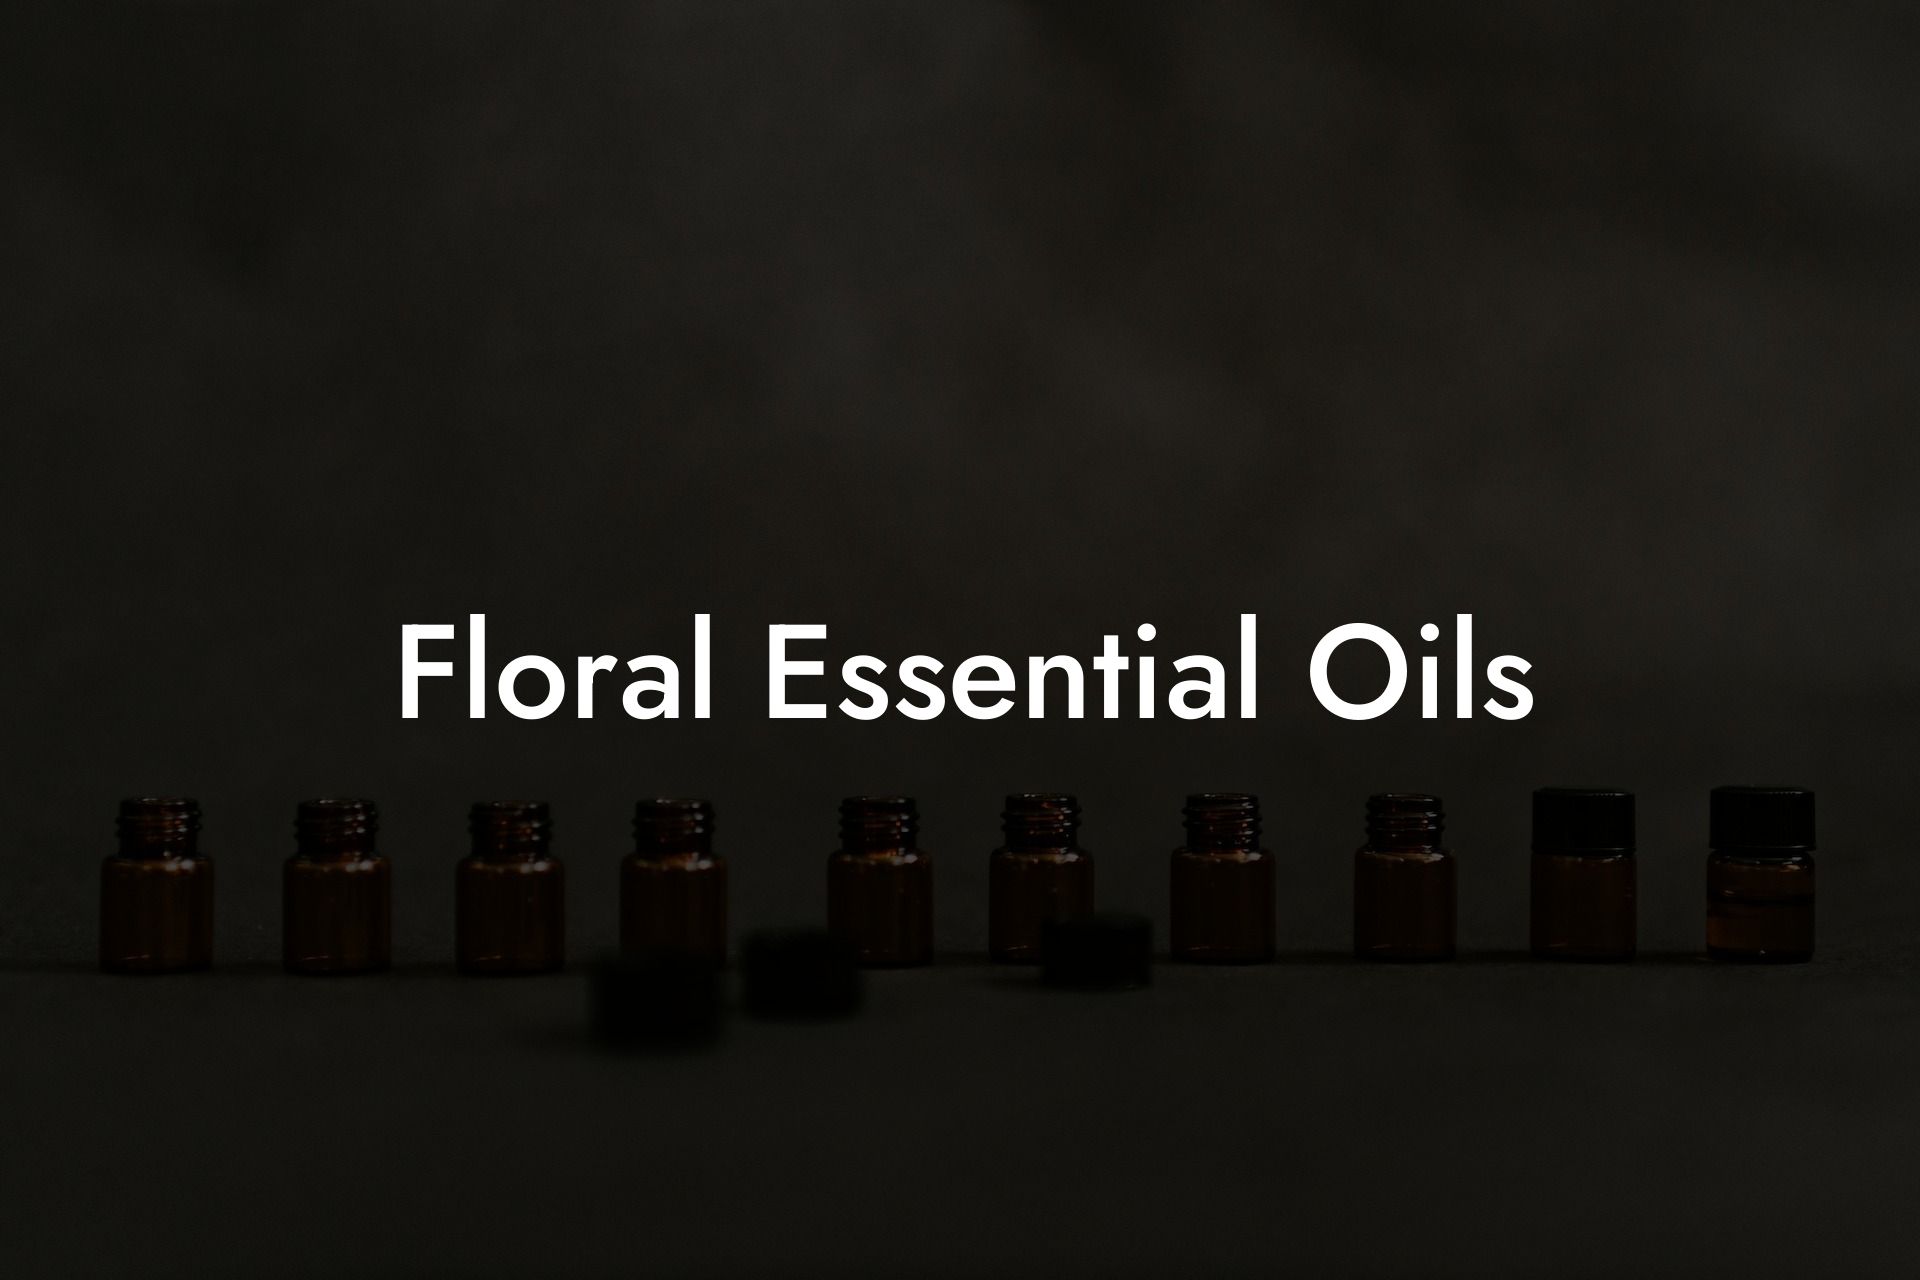 Floral Essential Oils